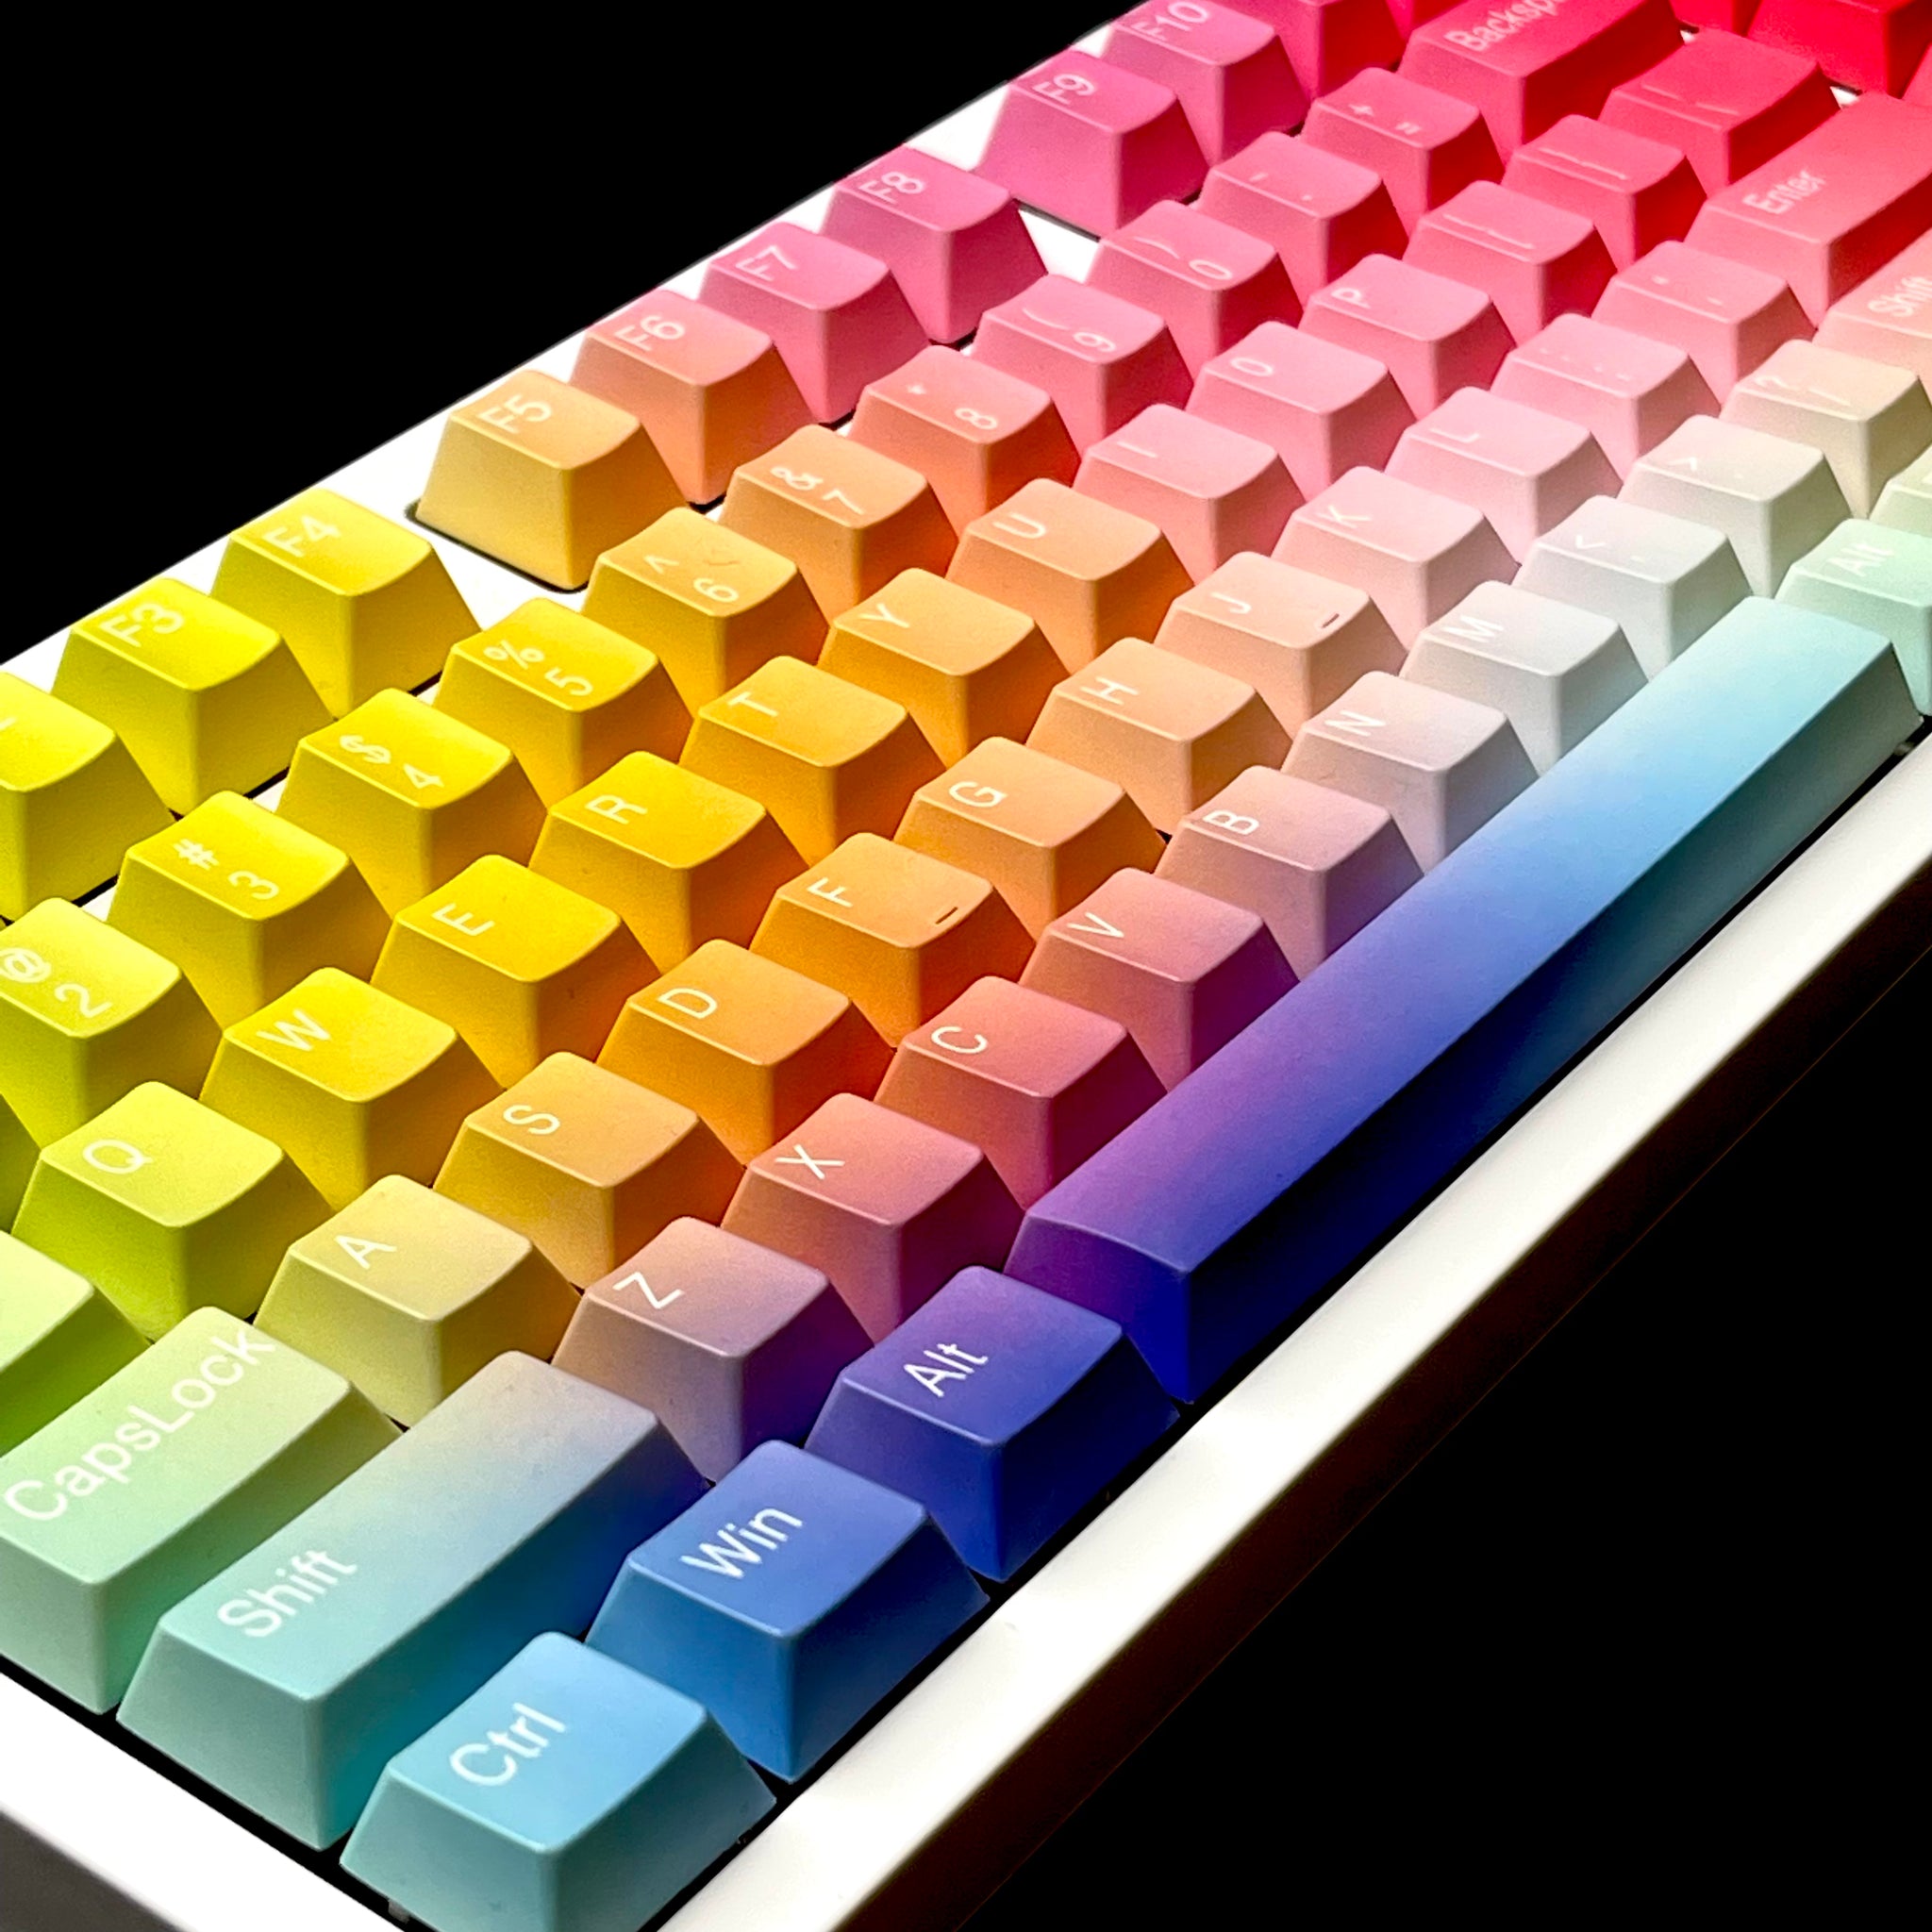 Creamy Rainbow Keyboard - Goblintechkeys